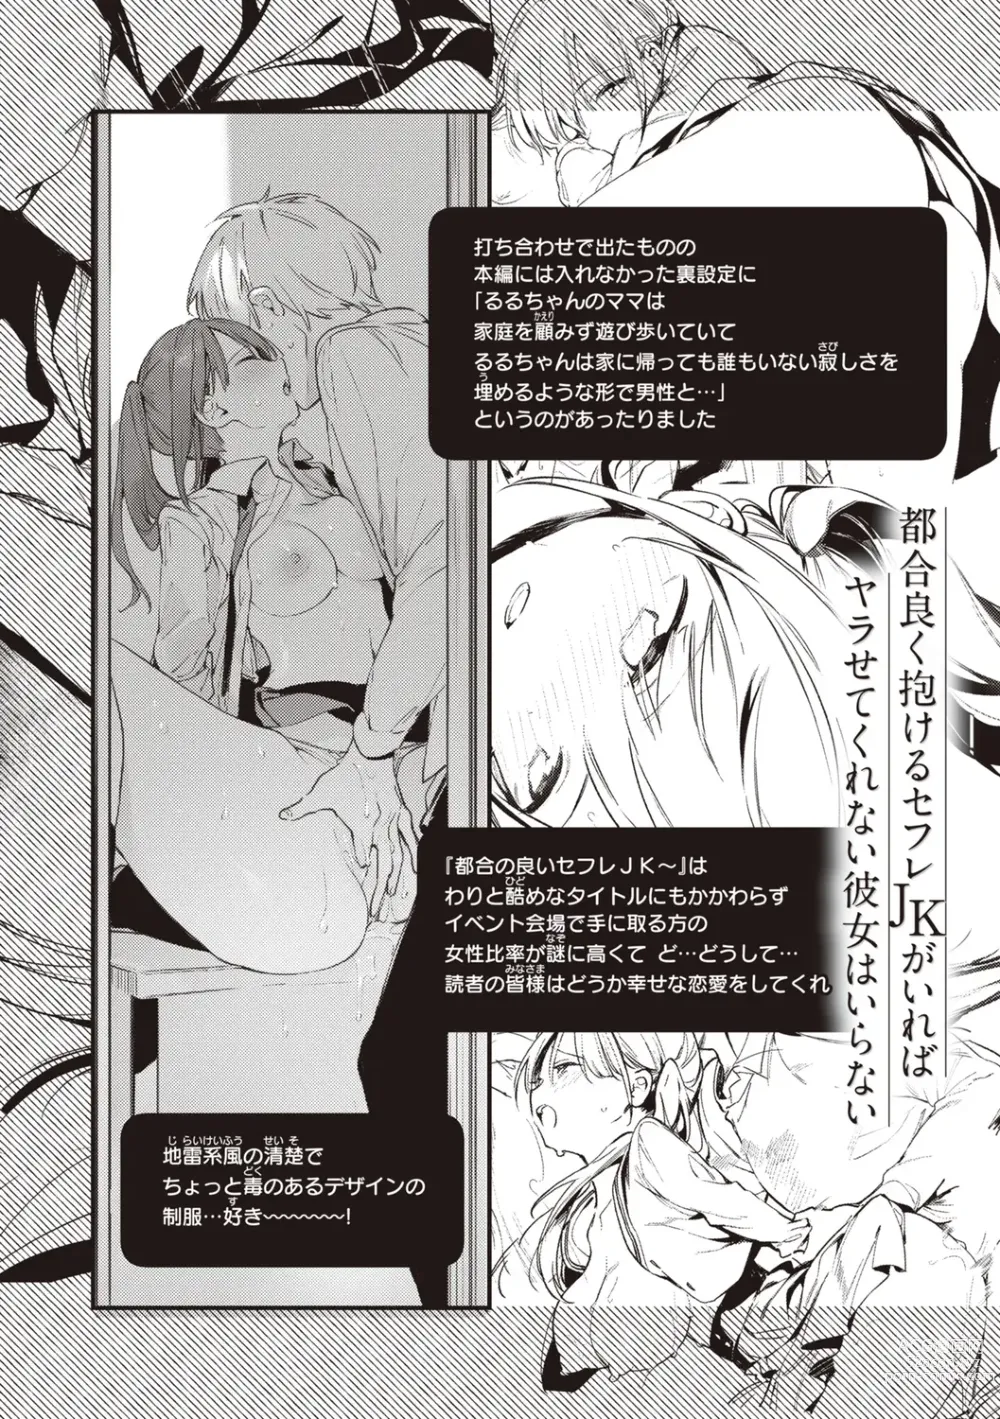 Page 174 of manga Nakushimono - Things I can´t find.